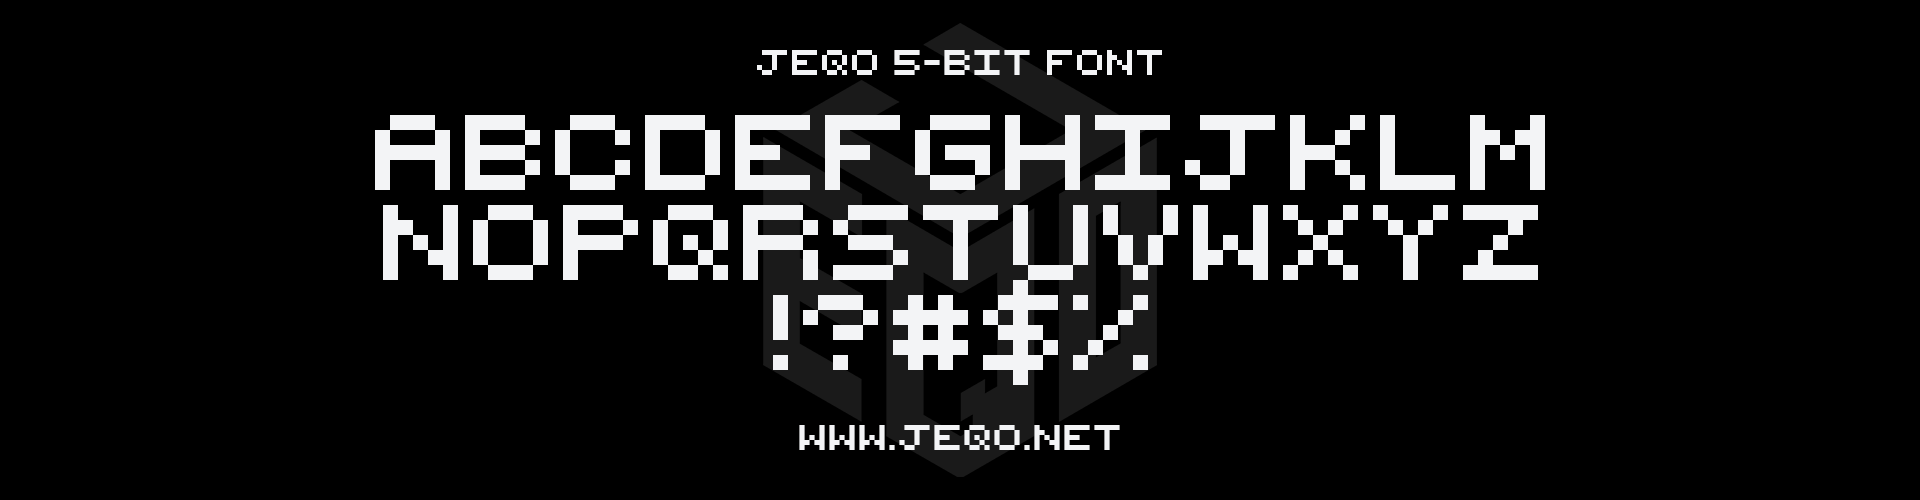 jeqo-5-bit-banner.png